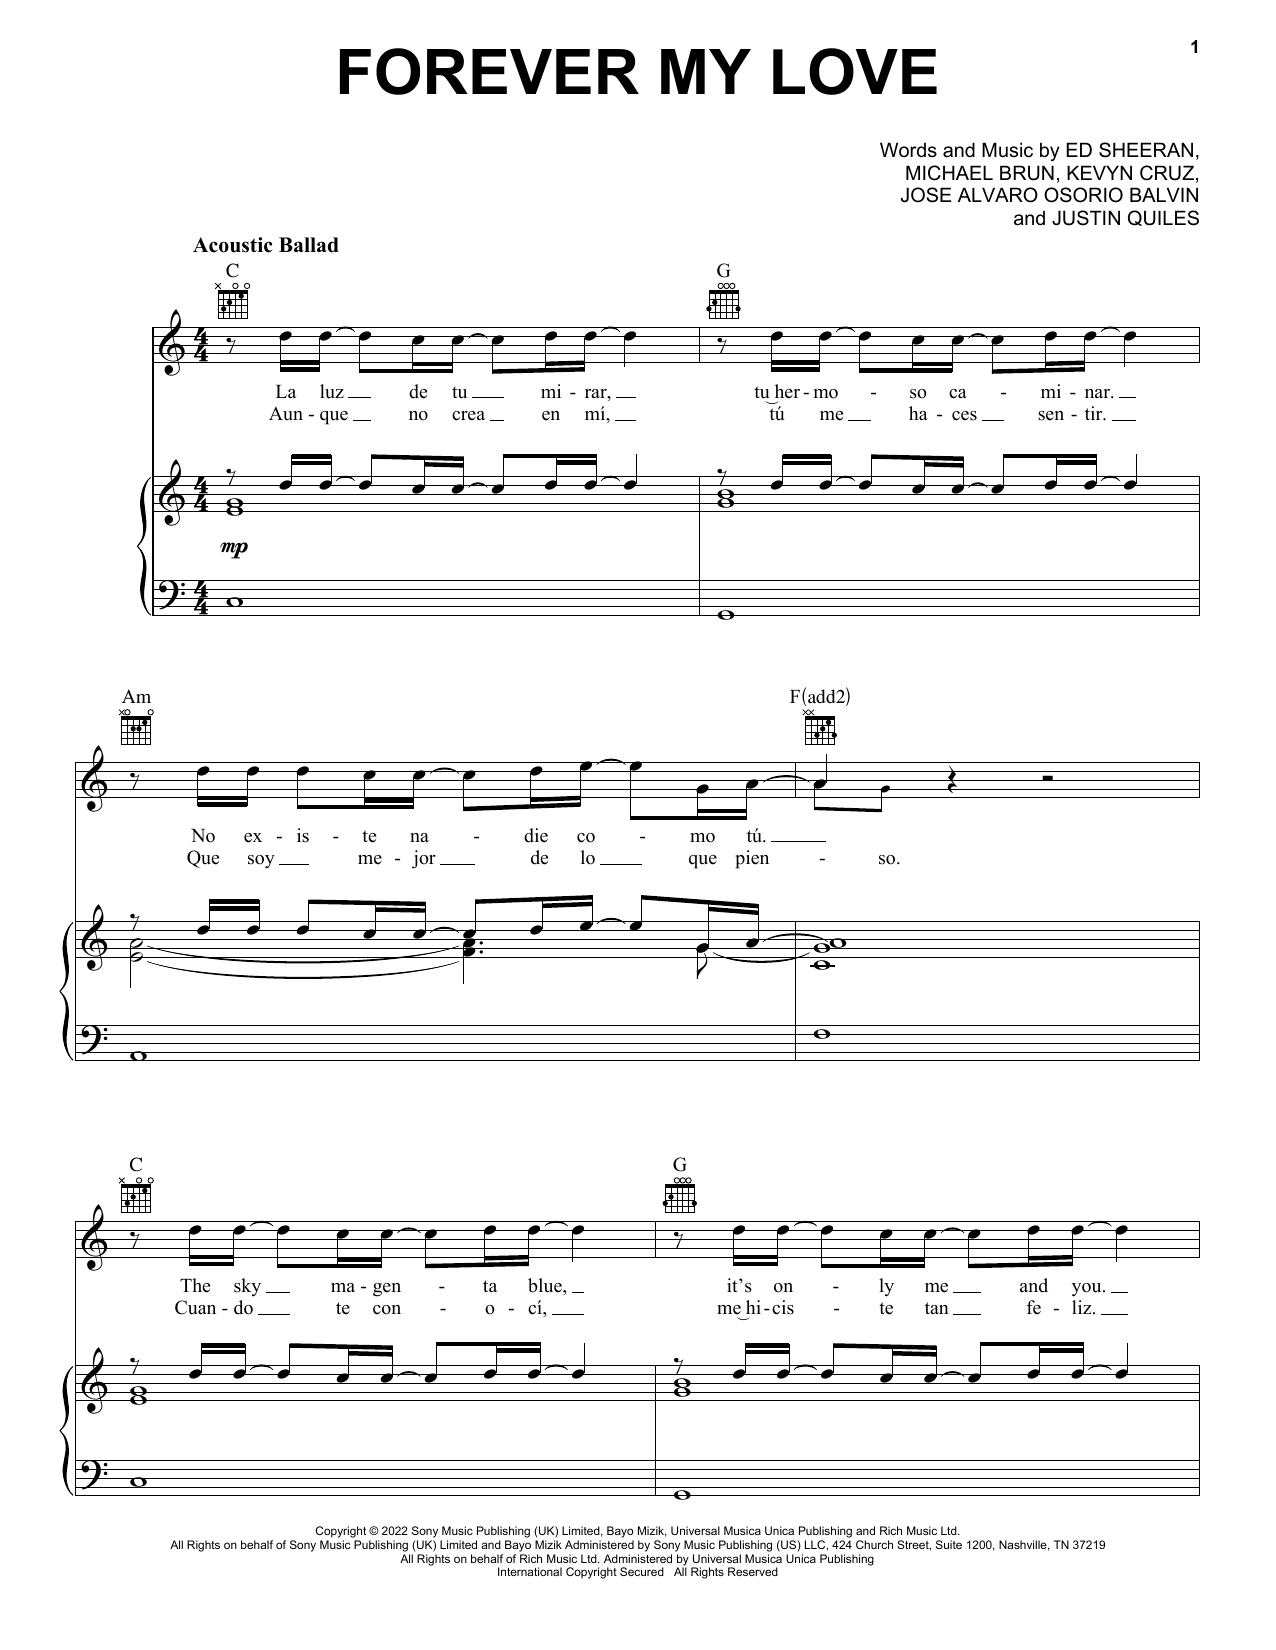 Ed Sheeran & J Balvin Forever My Love sheet music notes and chords. Download Printable PDF.